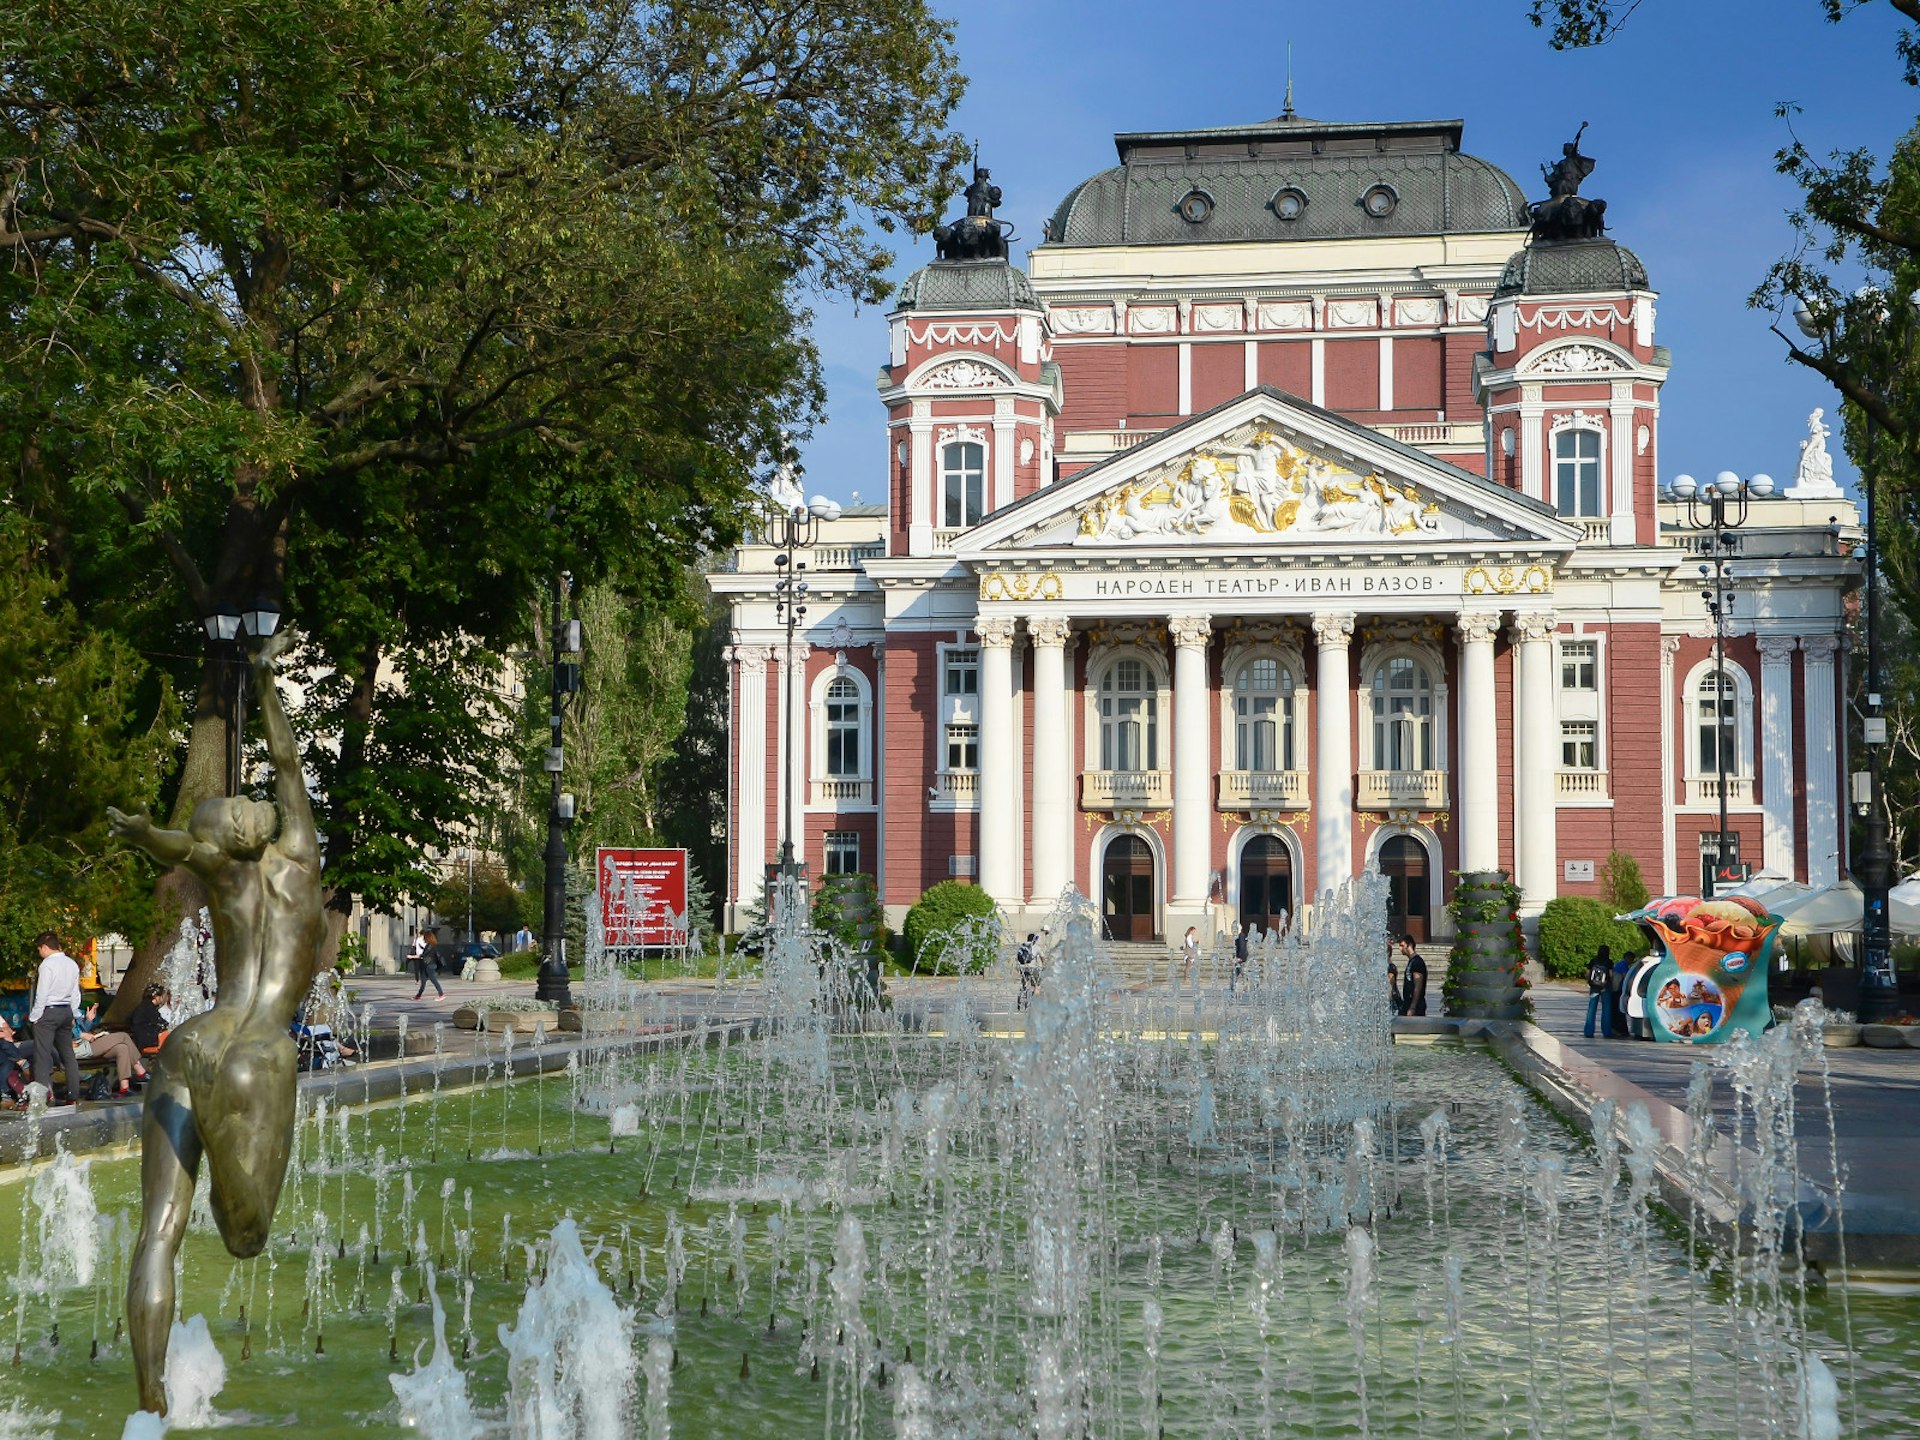 The Ivan Vazov National Theatre is one of Sofia's elegant landmarks © YingHui Liu / Shutterstock